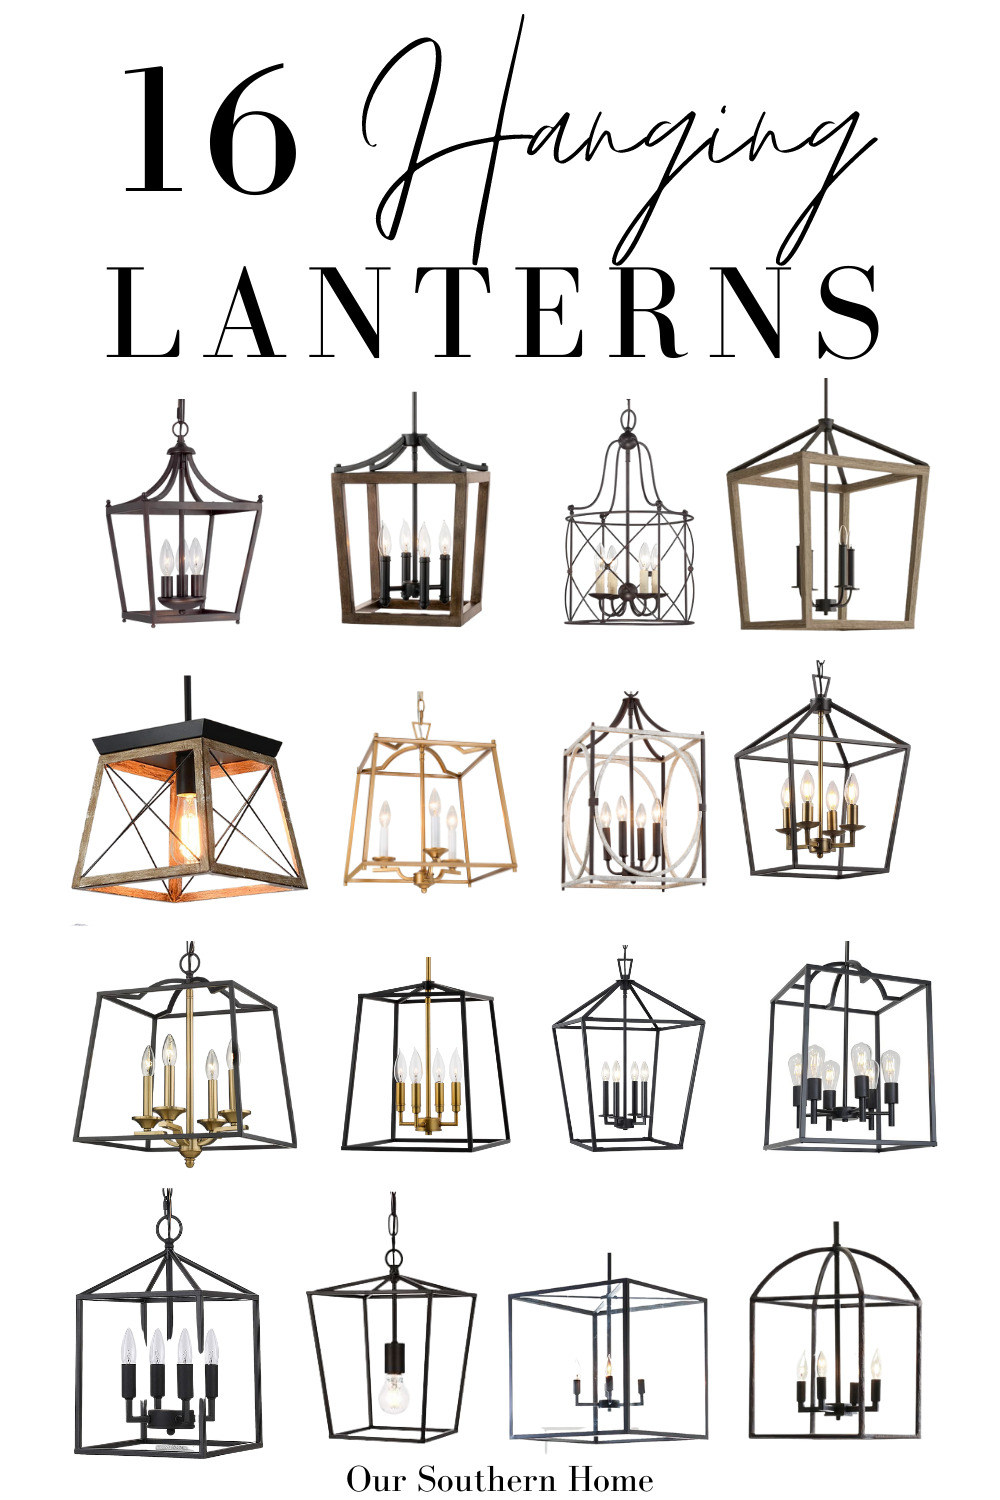 lanterns graphic